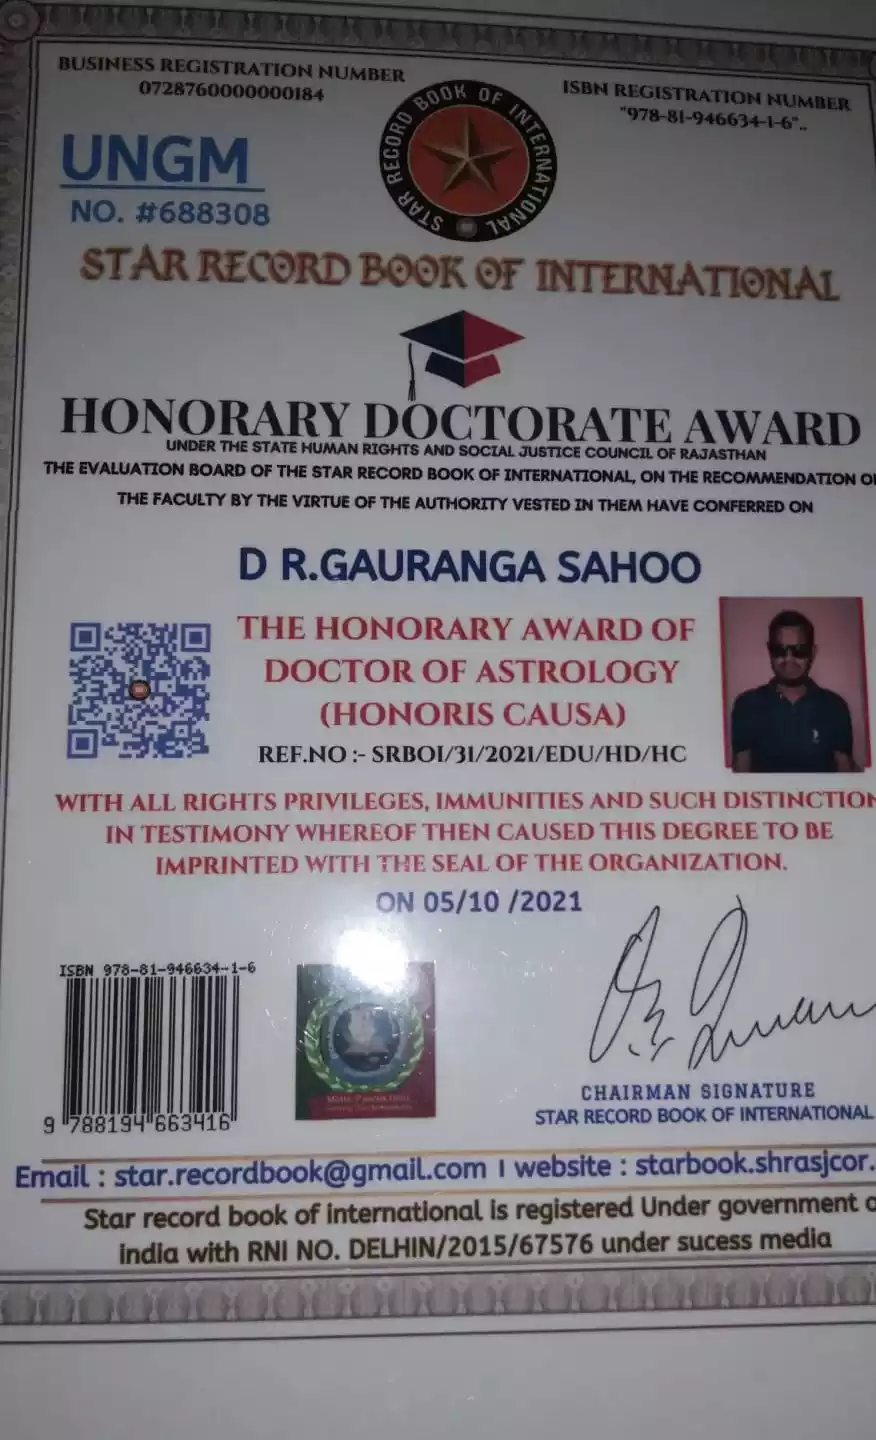  Honorary Doctorate Award